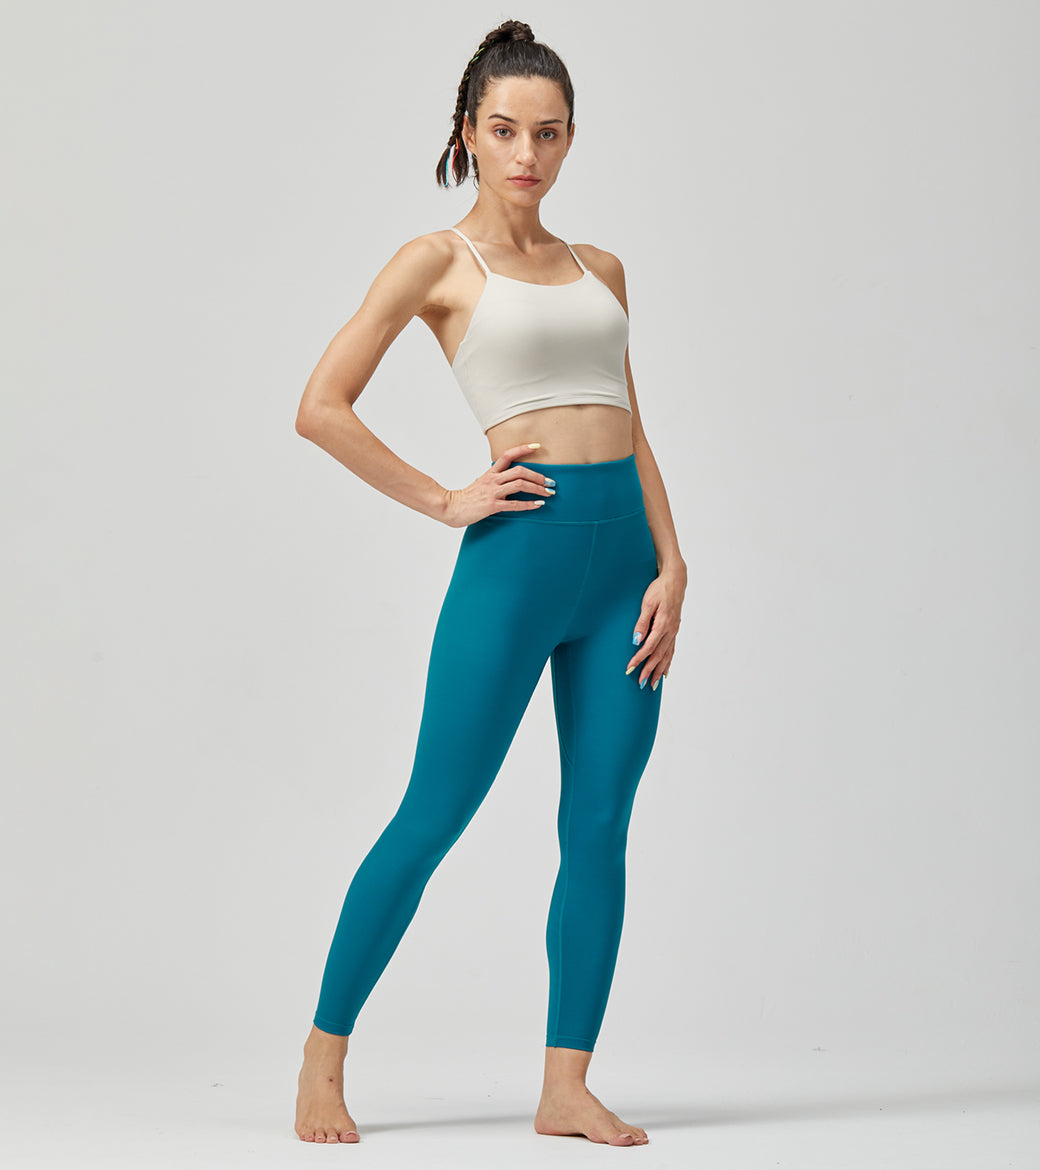 LOVESOFT Women's Lack Blue Easy Warm Yarm Leggings High Waist Hips Running Yoga Pants